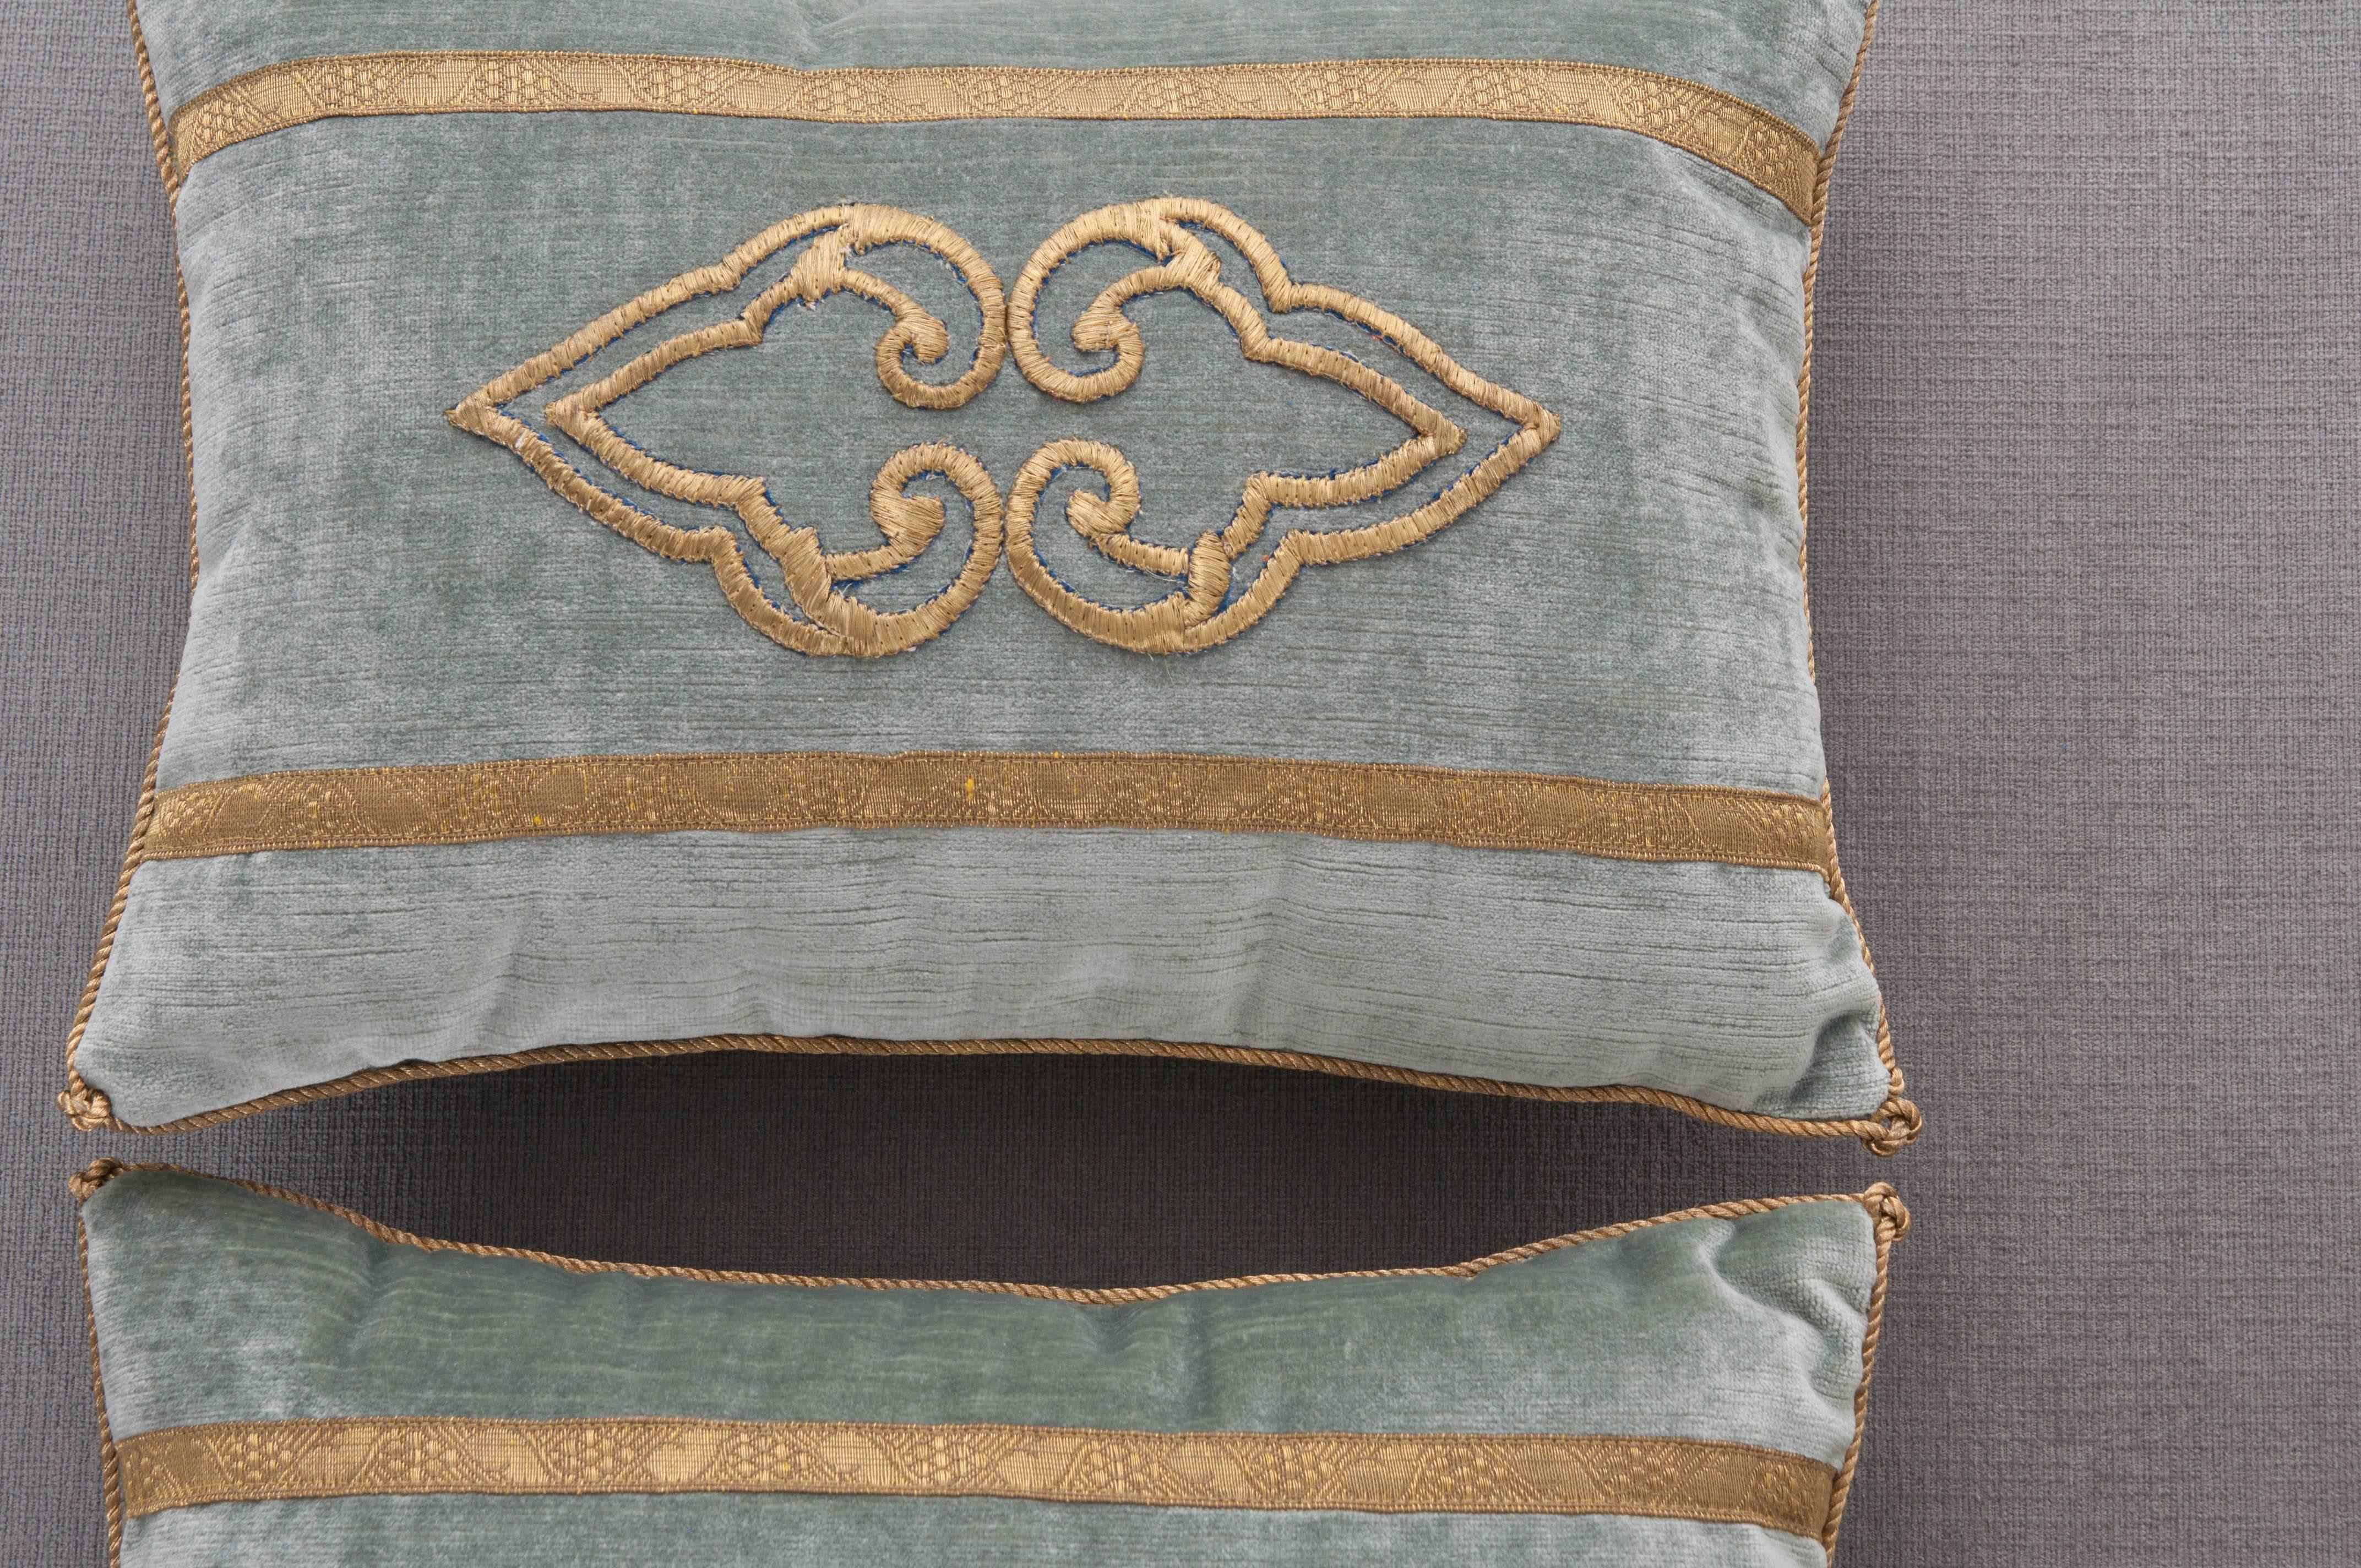 American Antique Textile Pillows by B.Viz Designs